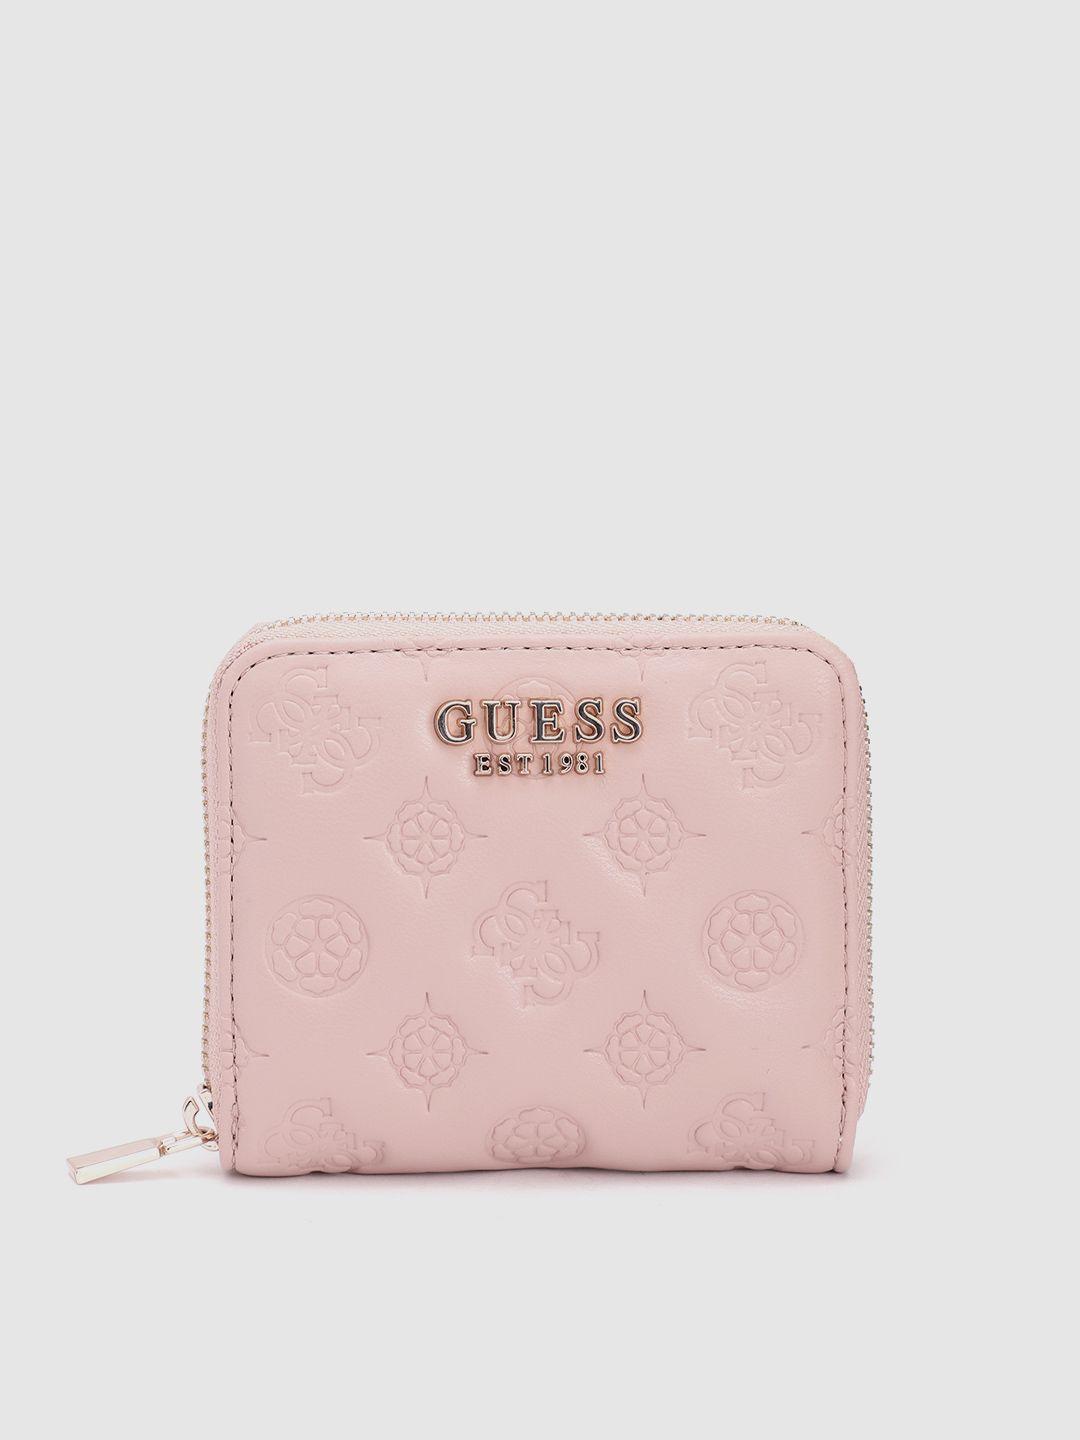 guess women brand logo textured zip around wallet